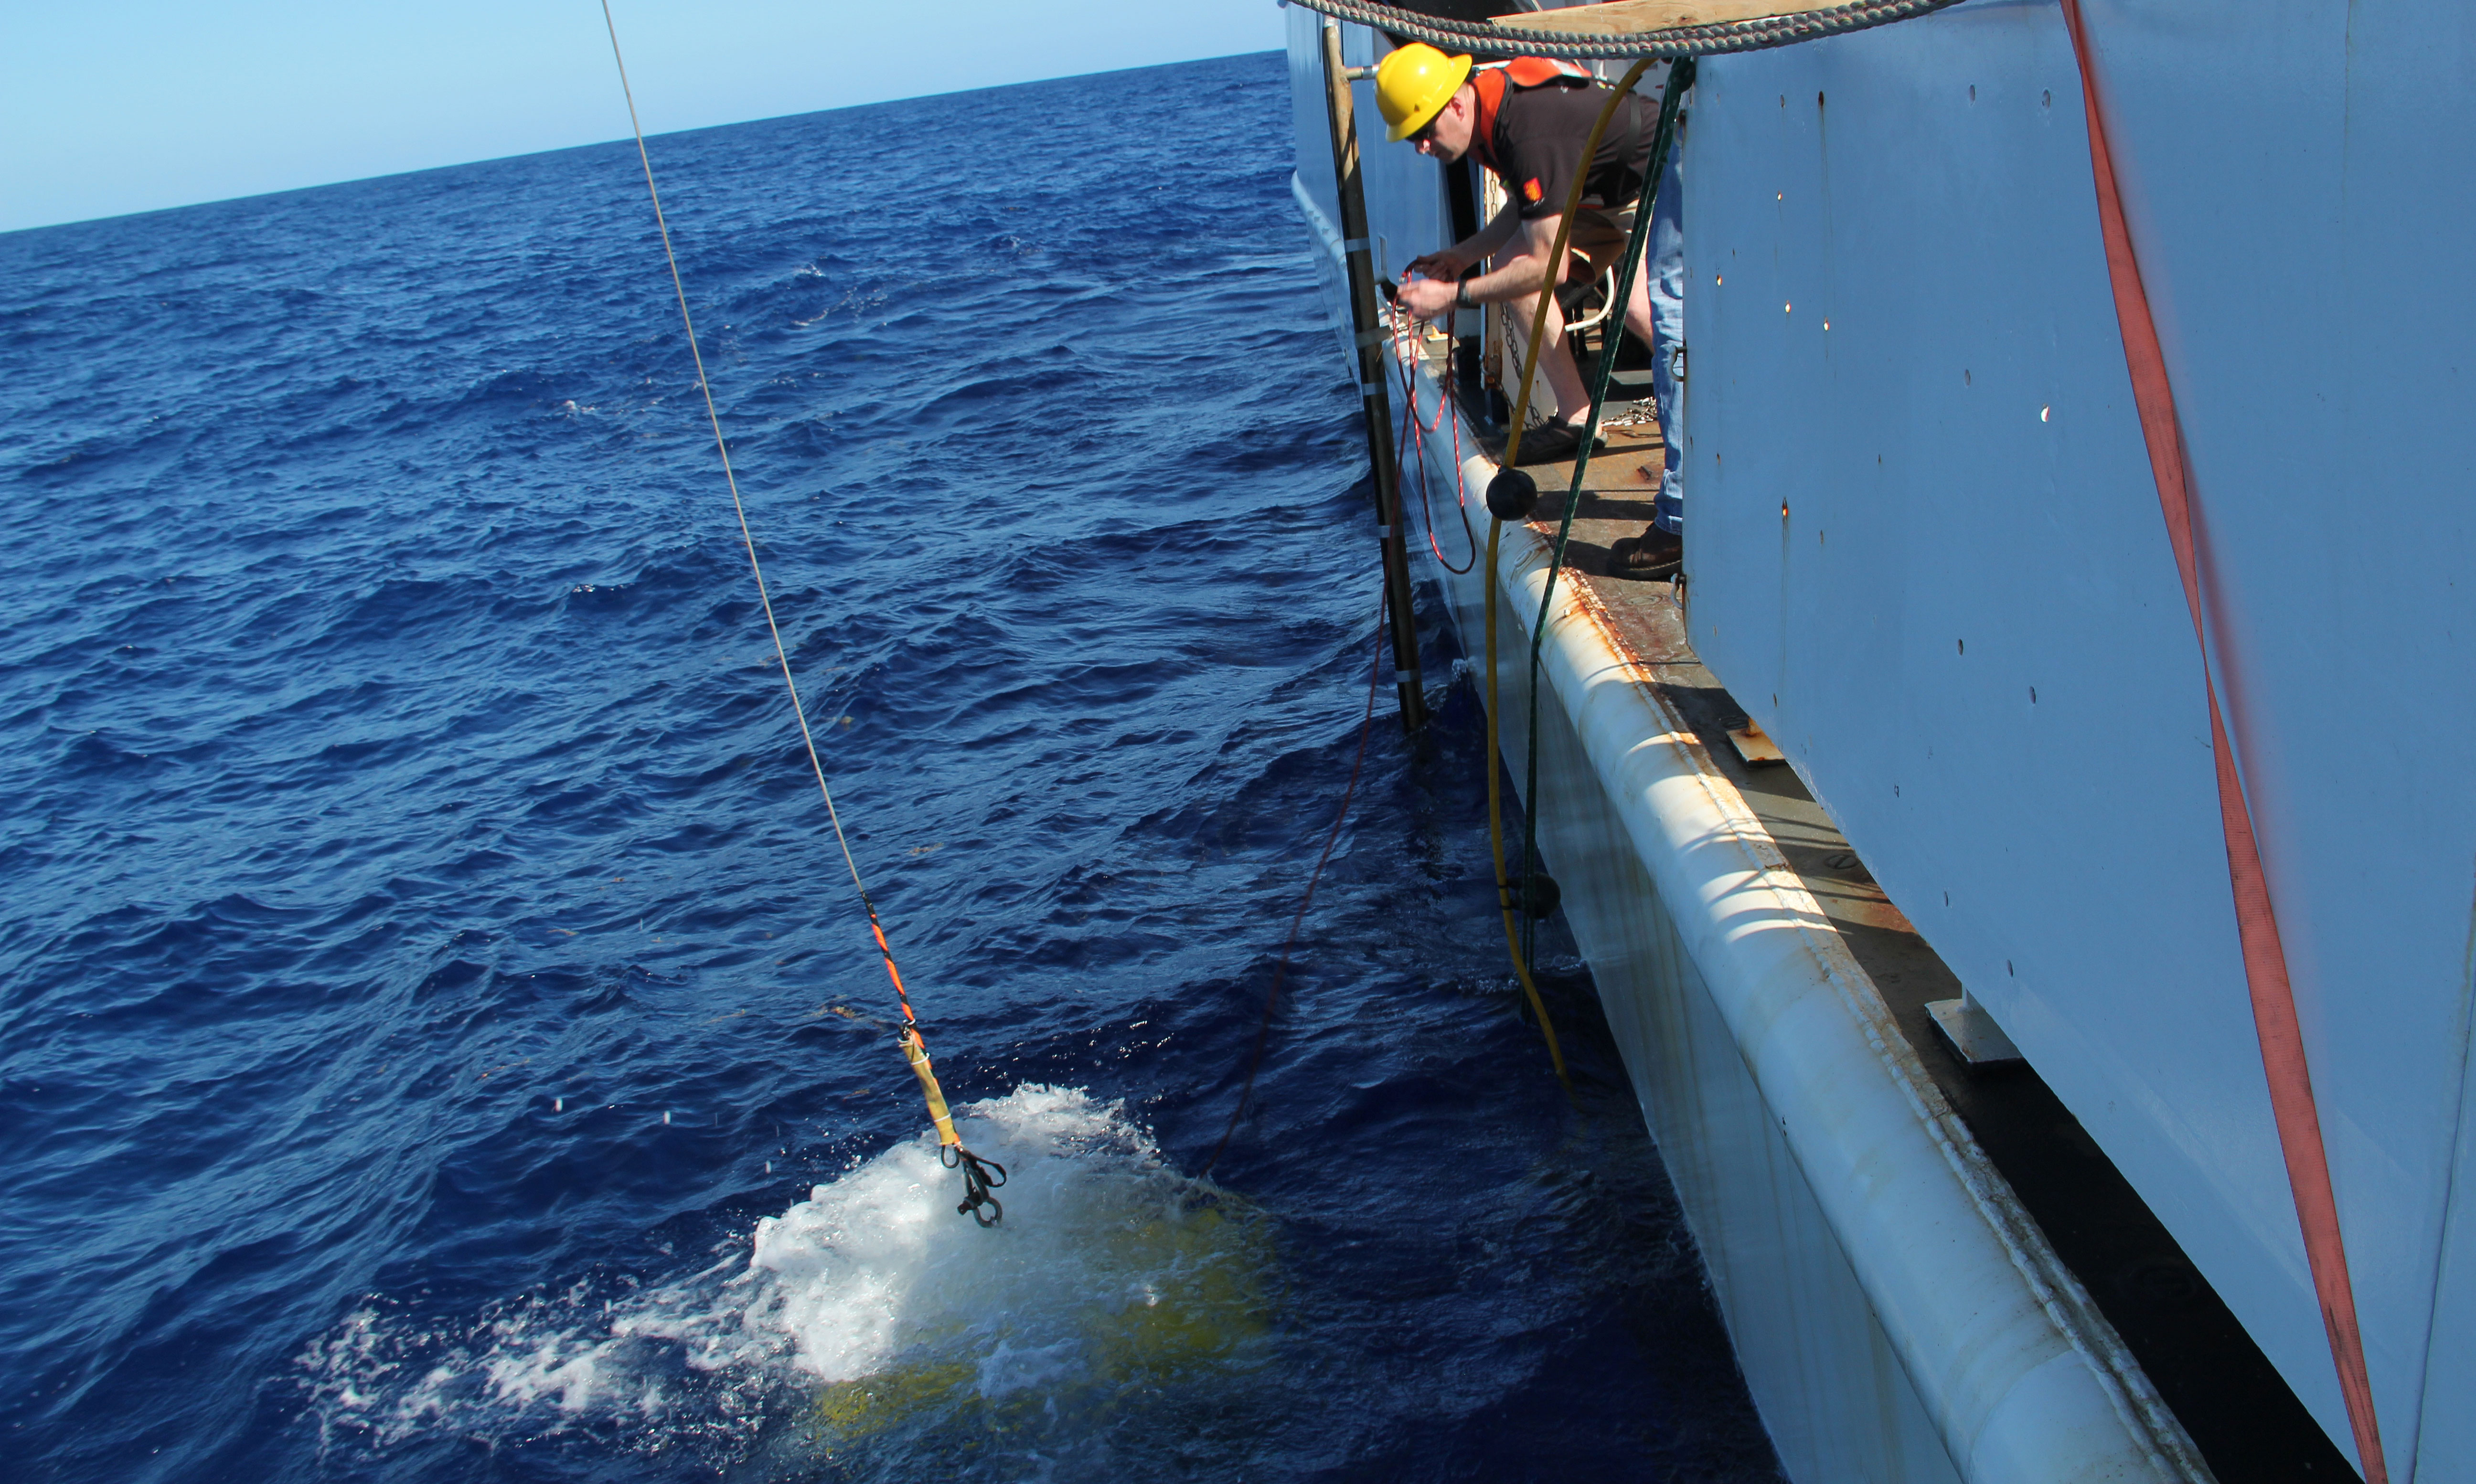 Oceanographer Tim Battista looks on as the ROV splashes into the ocean.